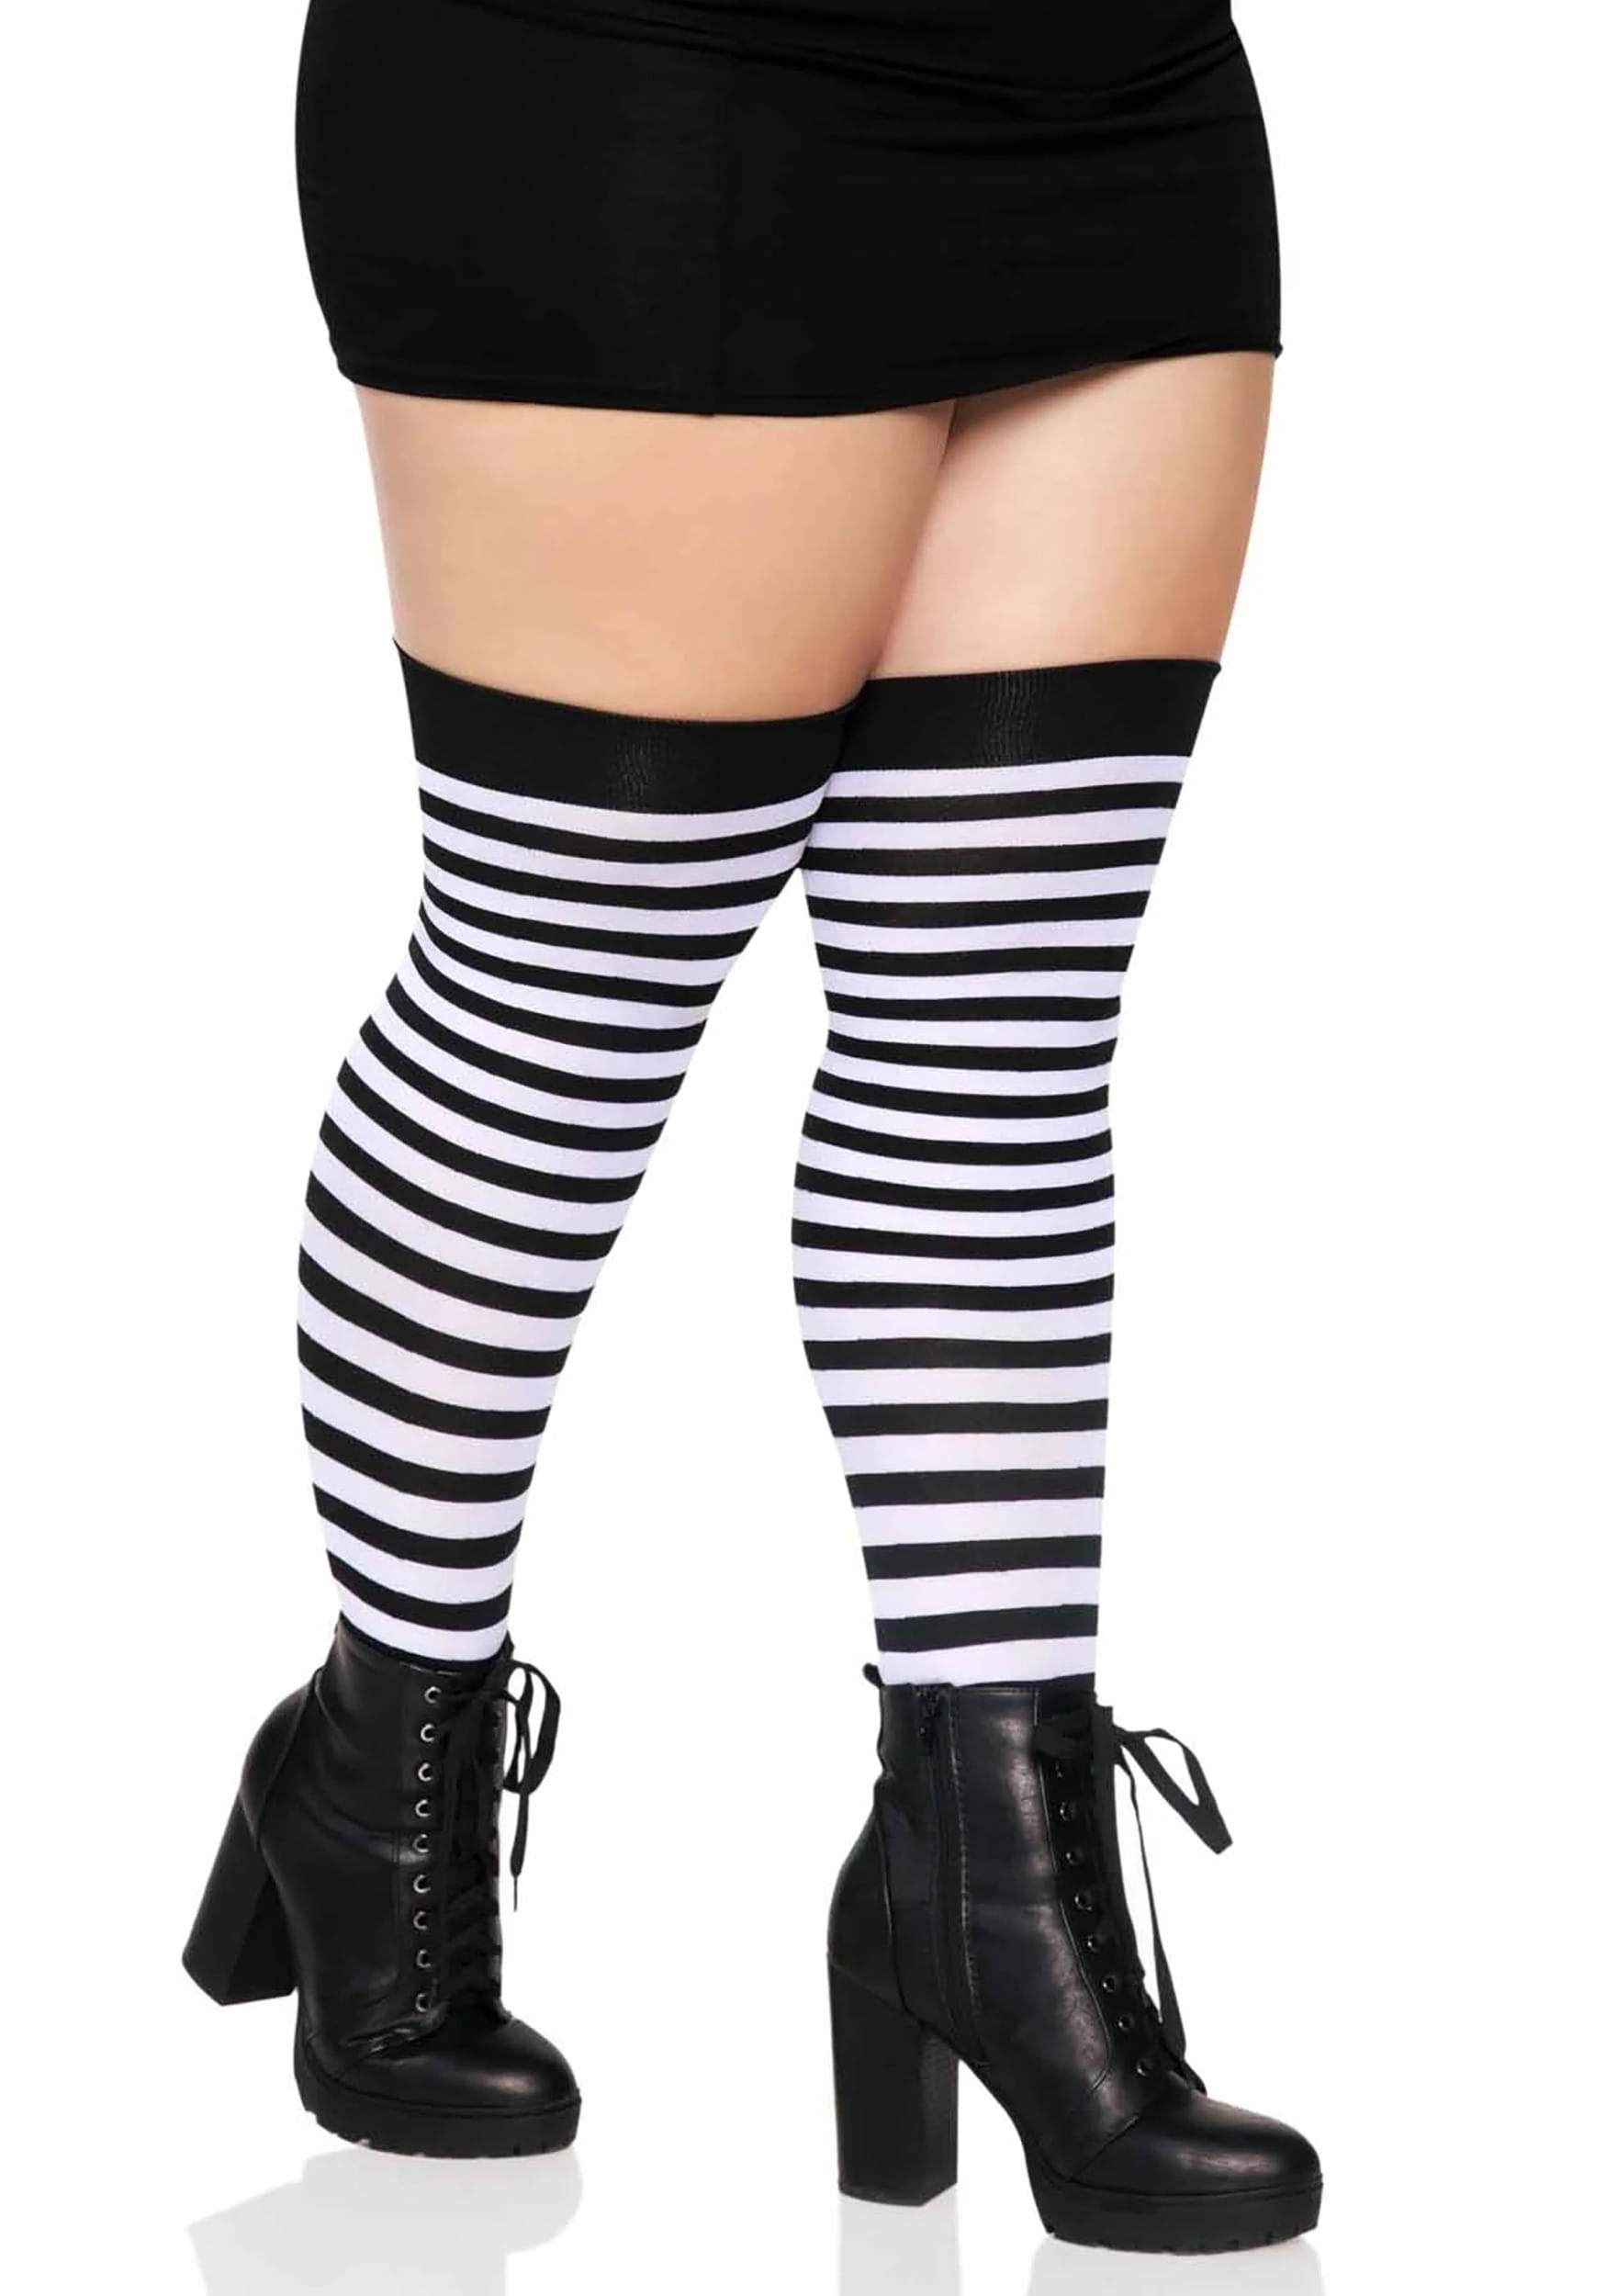 White Black Strip Adult Over The Knee Socks – Costume Zoo